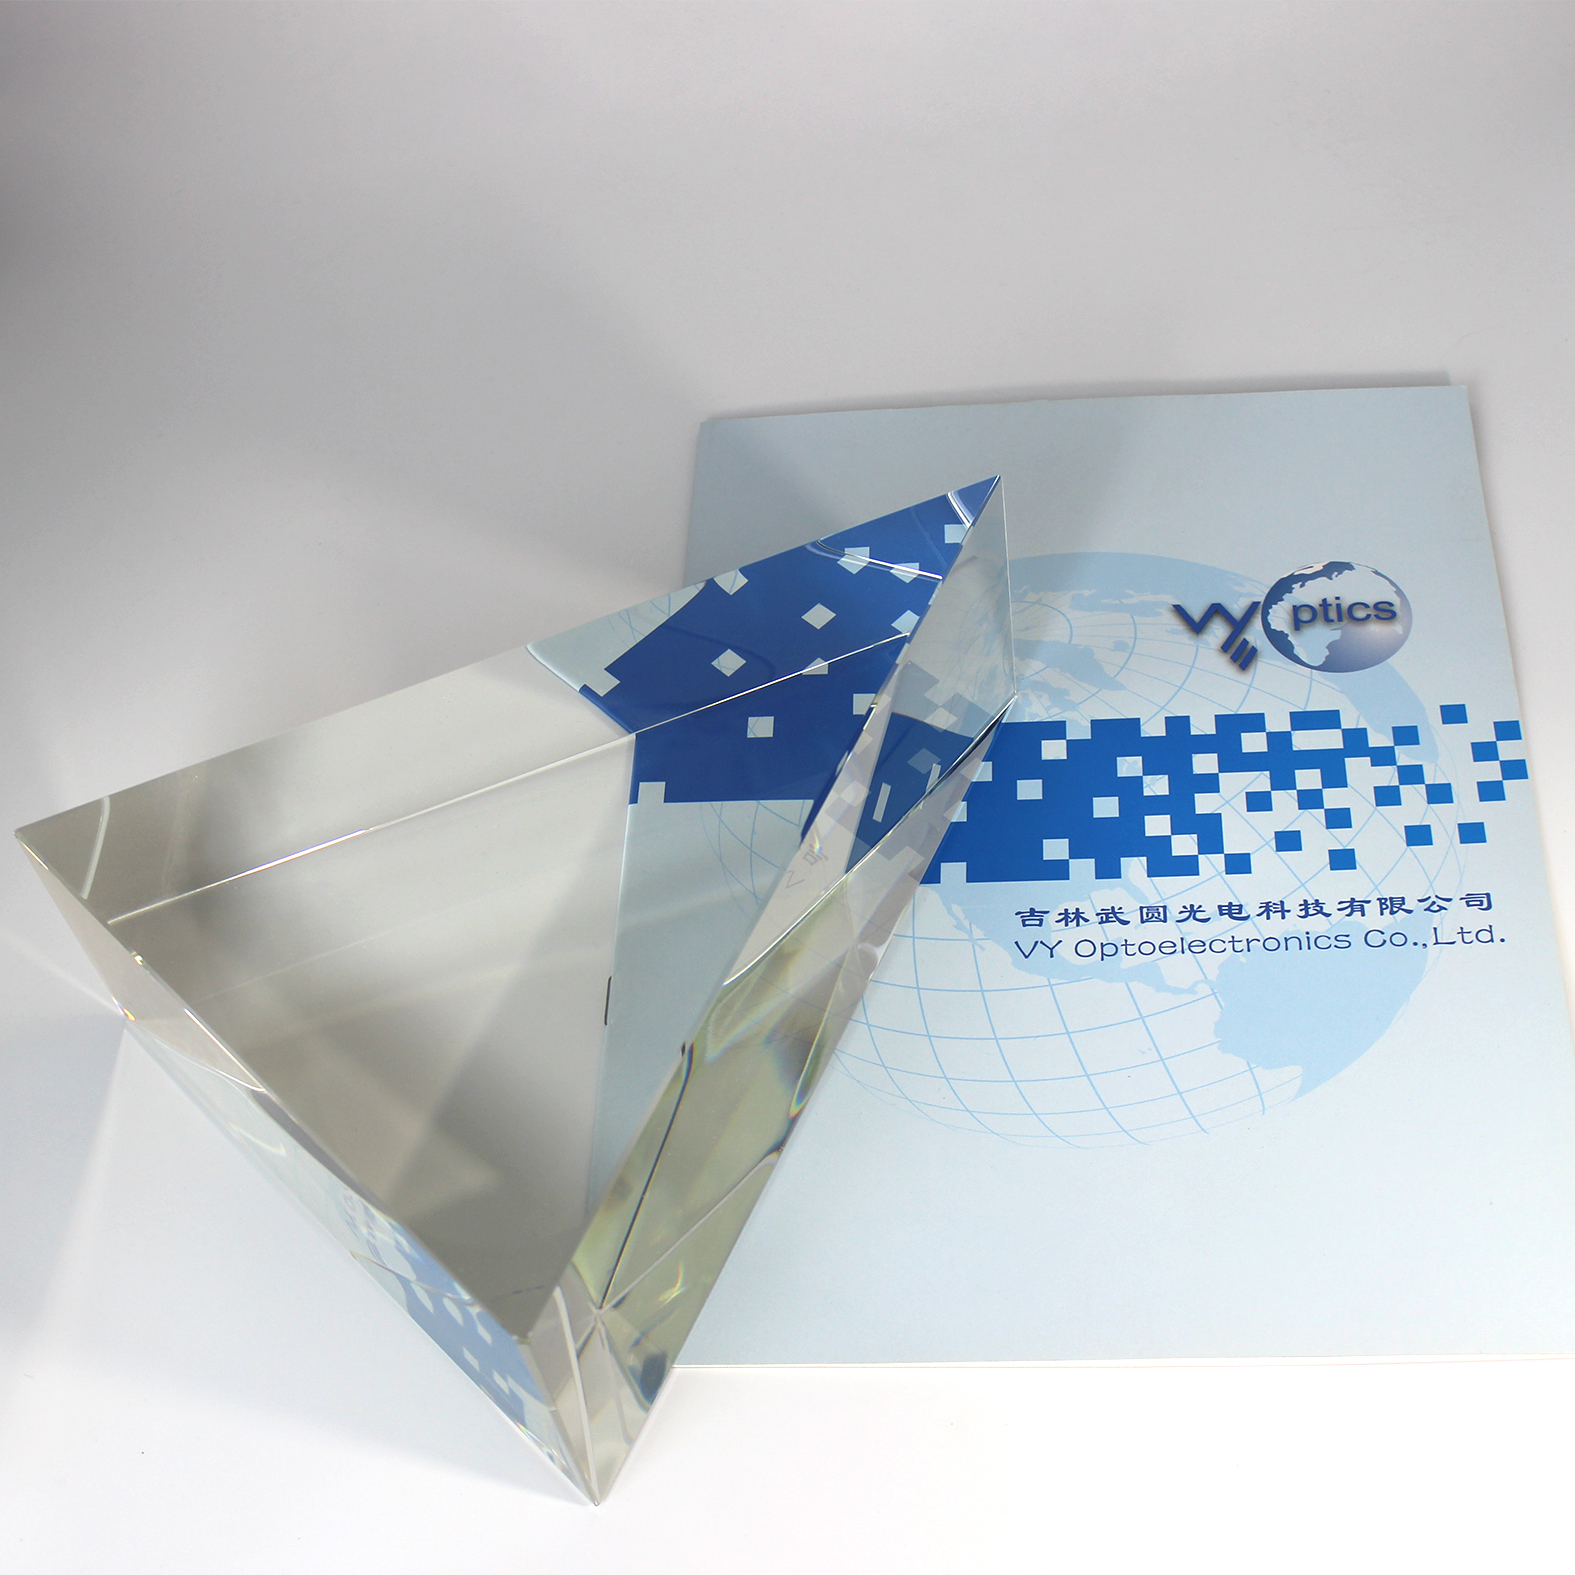 Optical K9 Quartz Glass Triangular Prism for Student Teaching and Photography